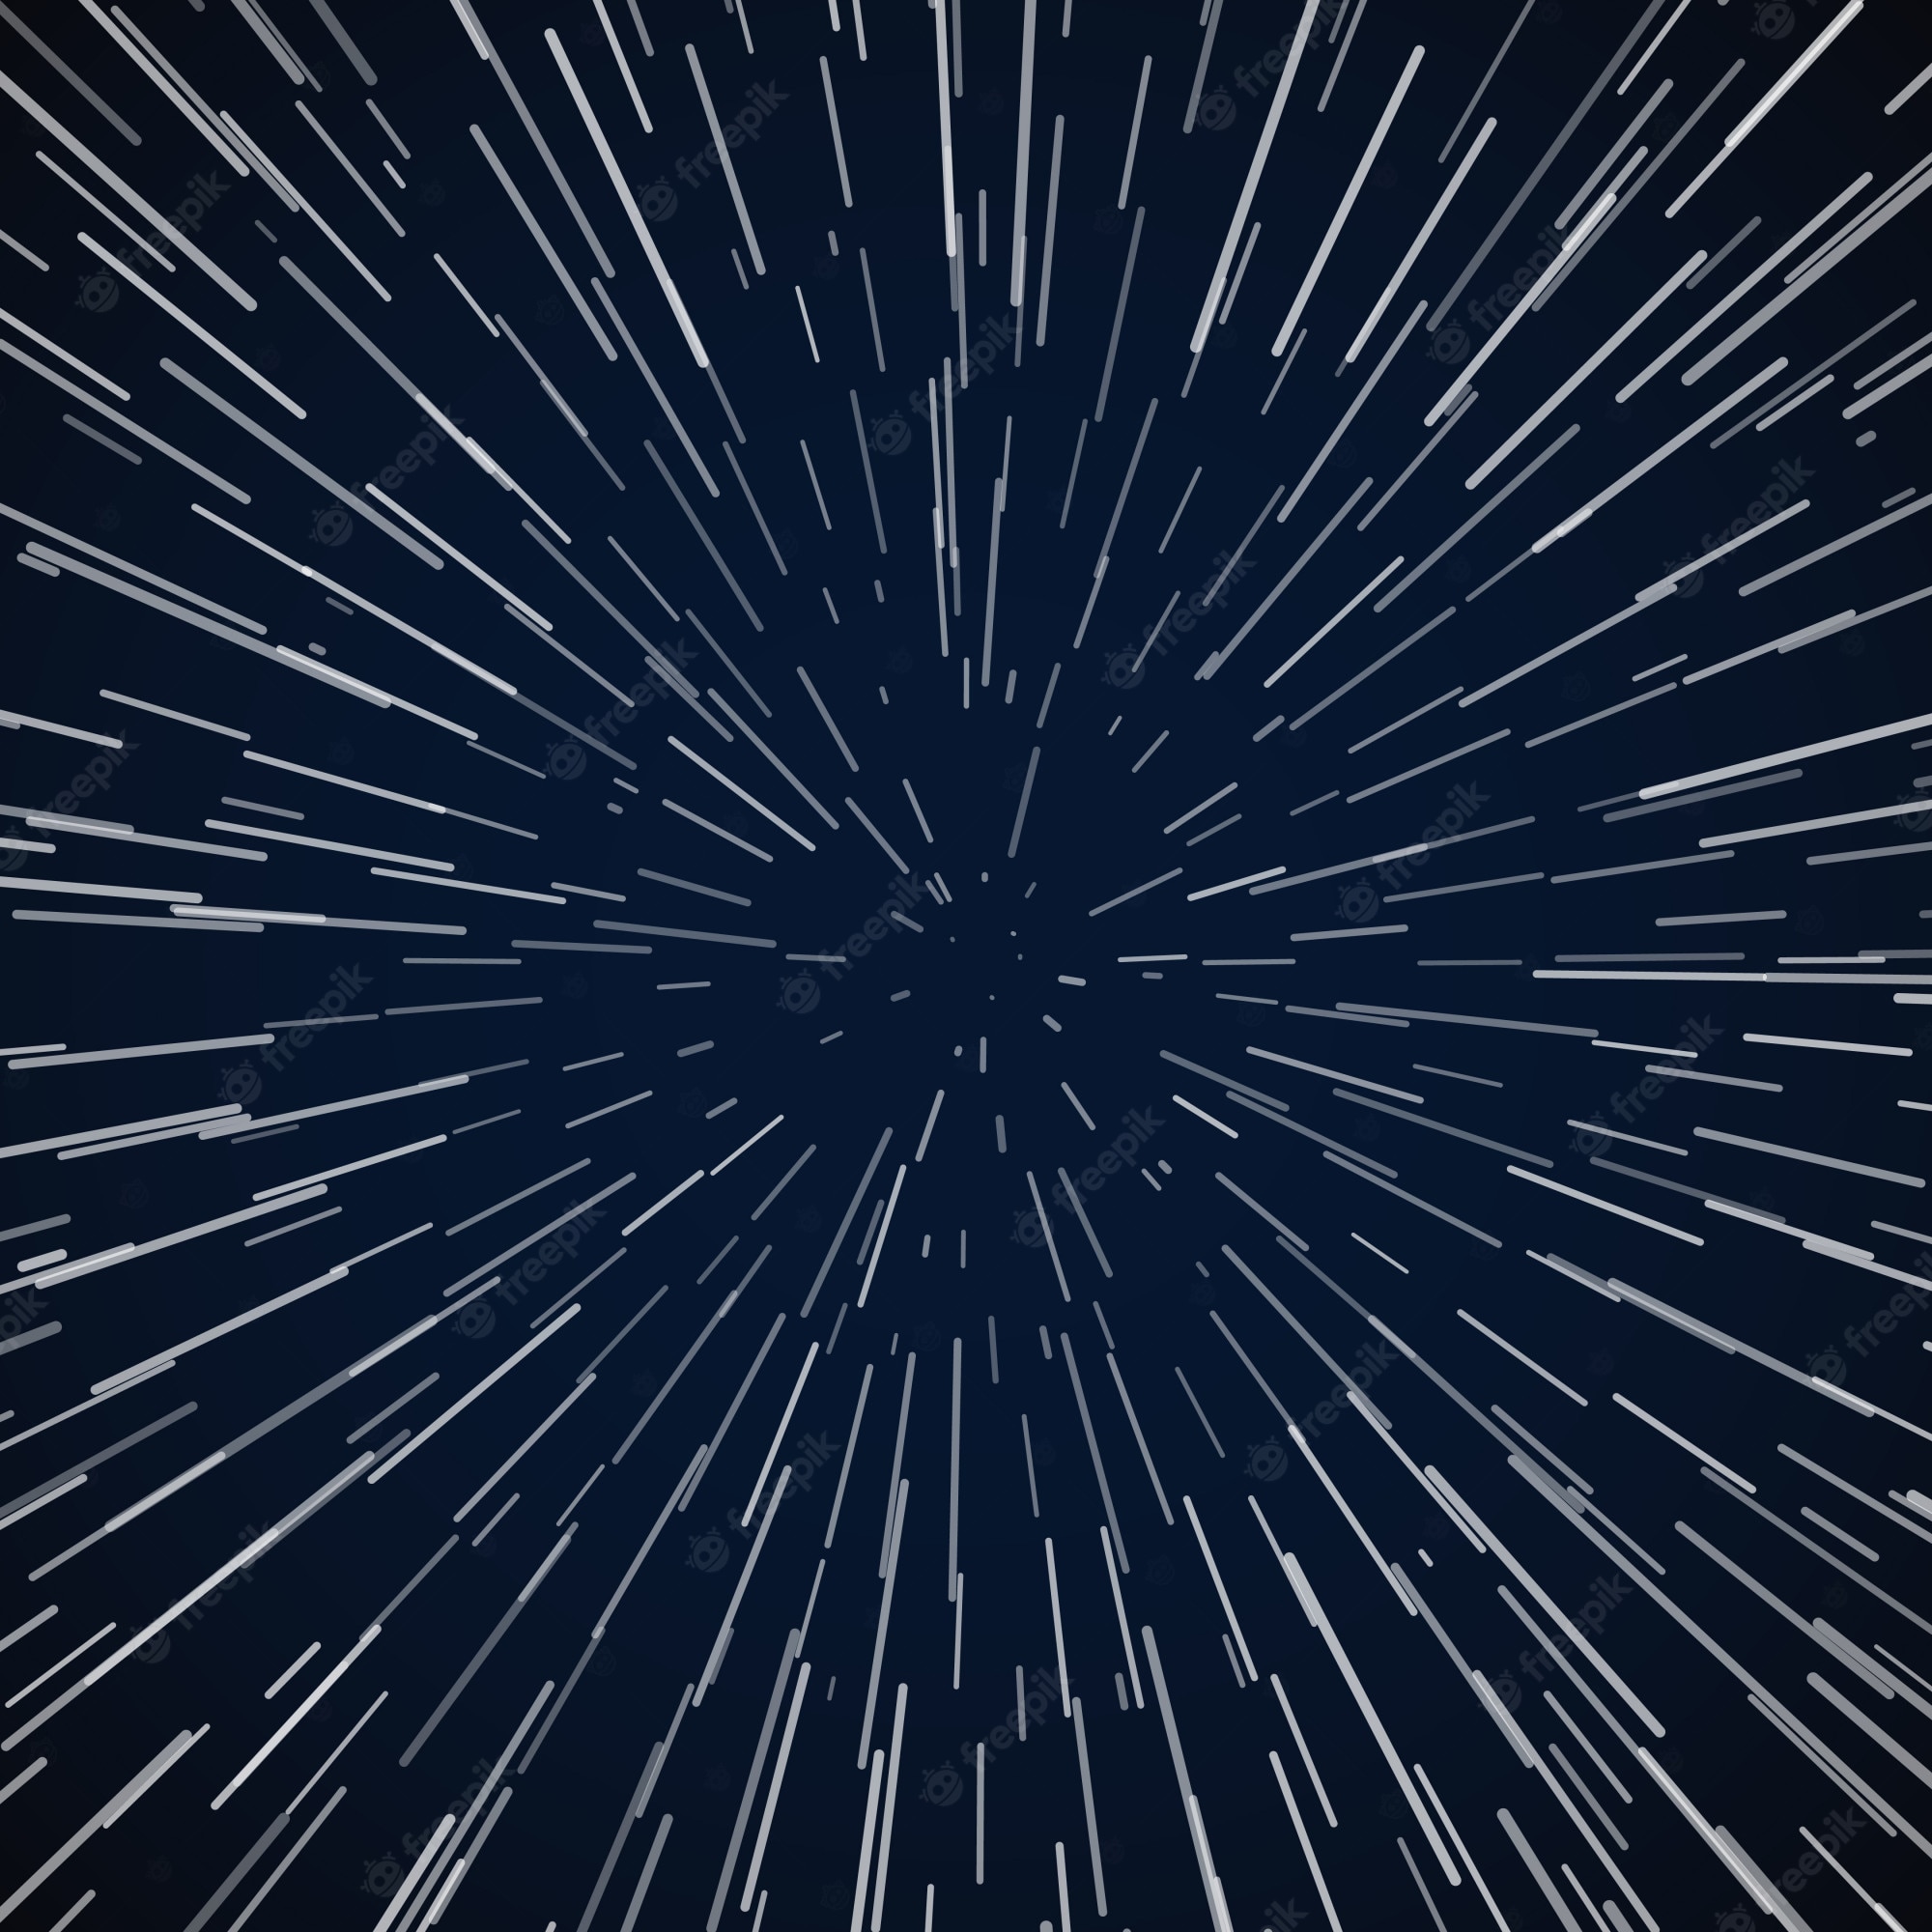 Star Wars Galaxy Background